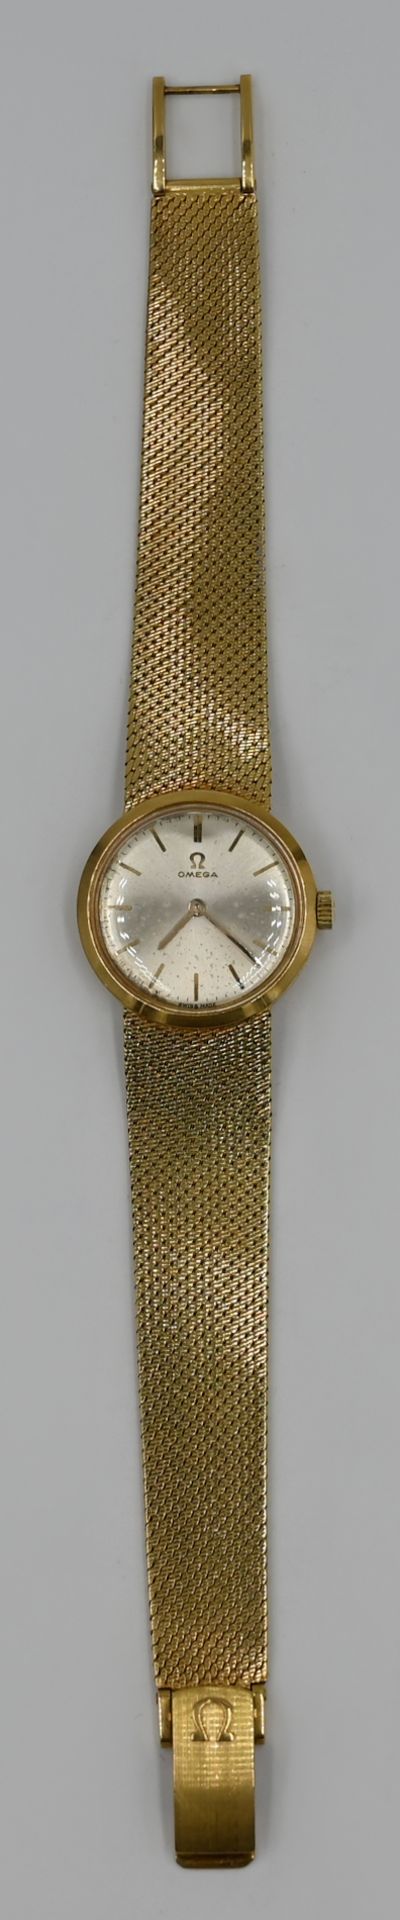 1 Damenarmbanduhr OMEGA, GG 18ct., in Originalschatulle, fleckiges Ziffernblatt, Handaufzug, Uhr läu - Image 2 of 3